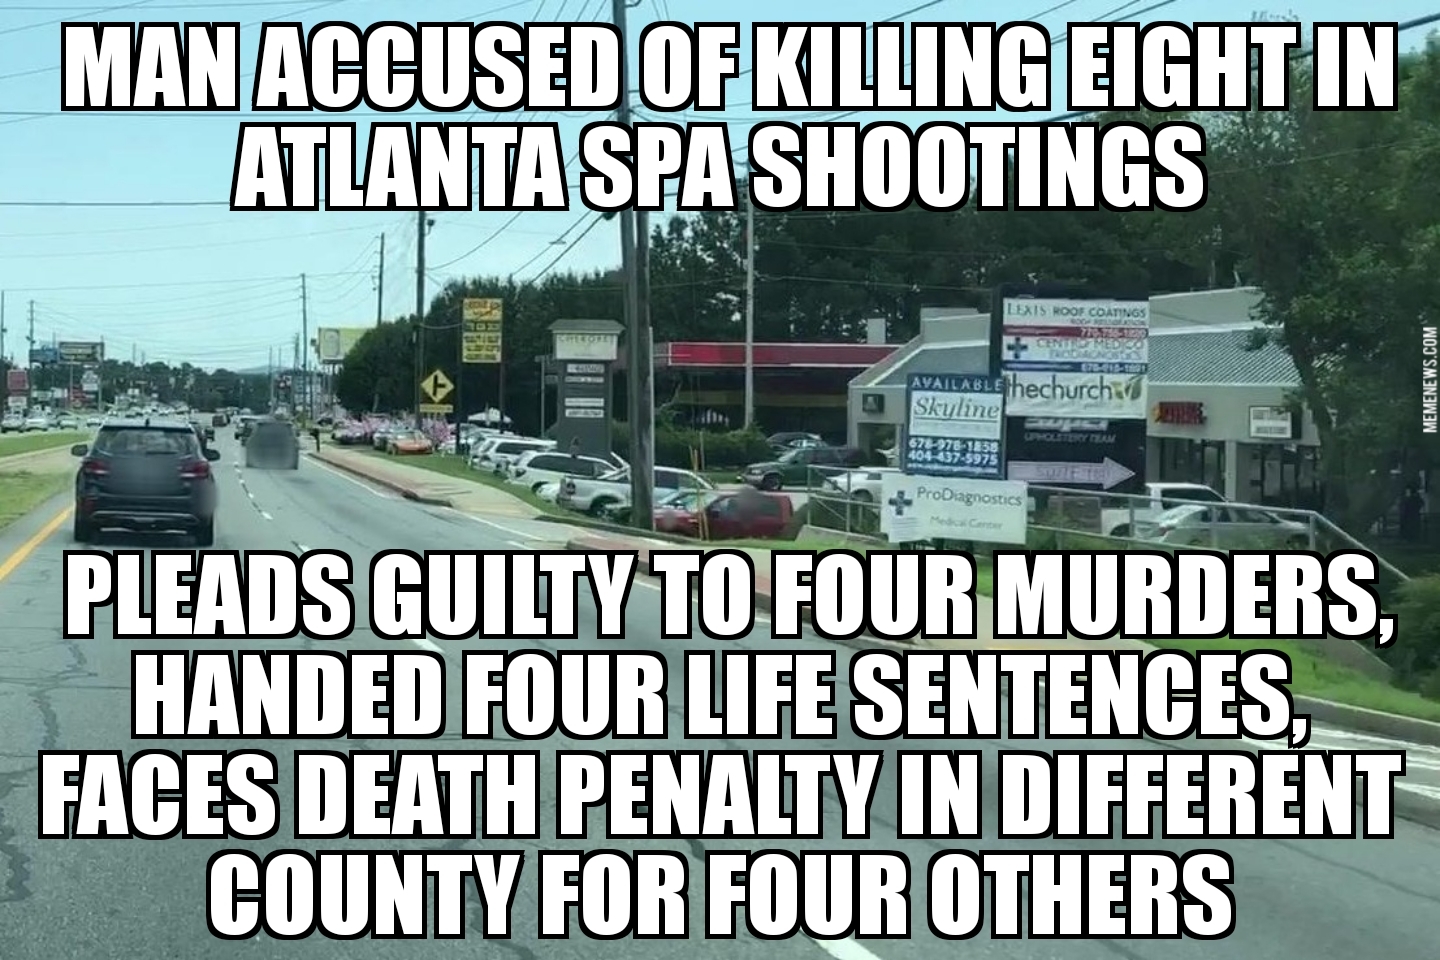 Atlanta spa shooter pleads guilty